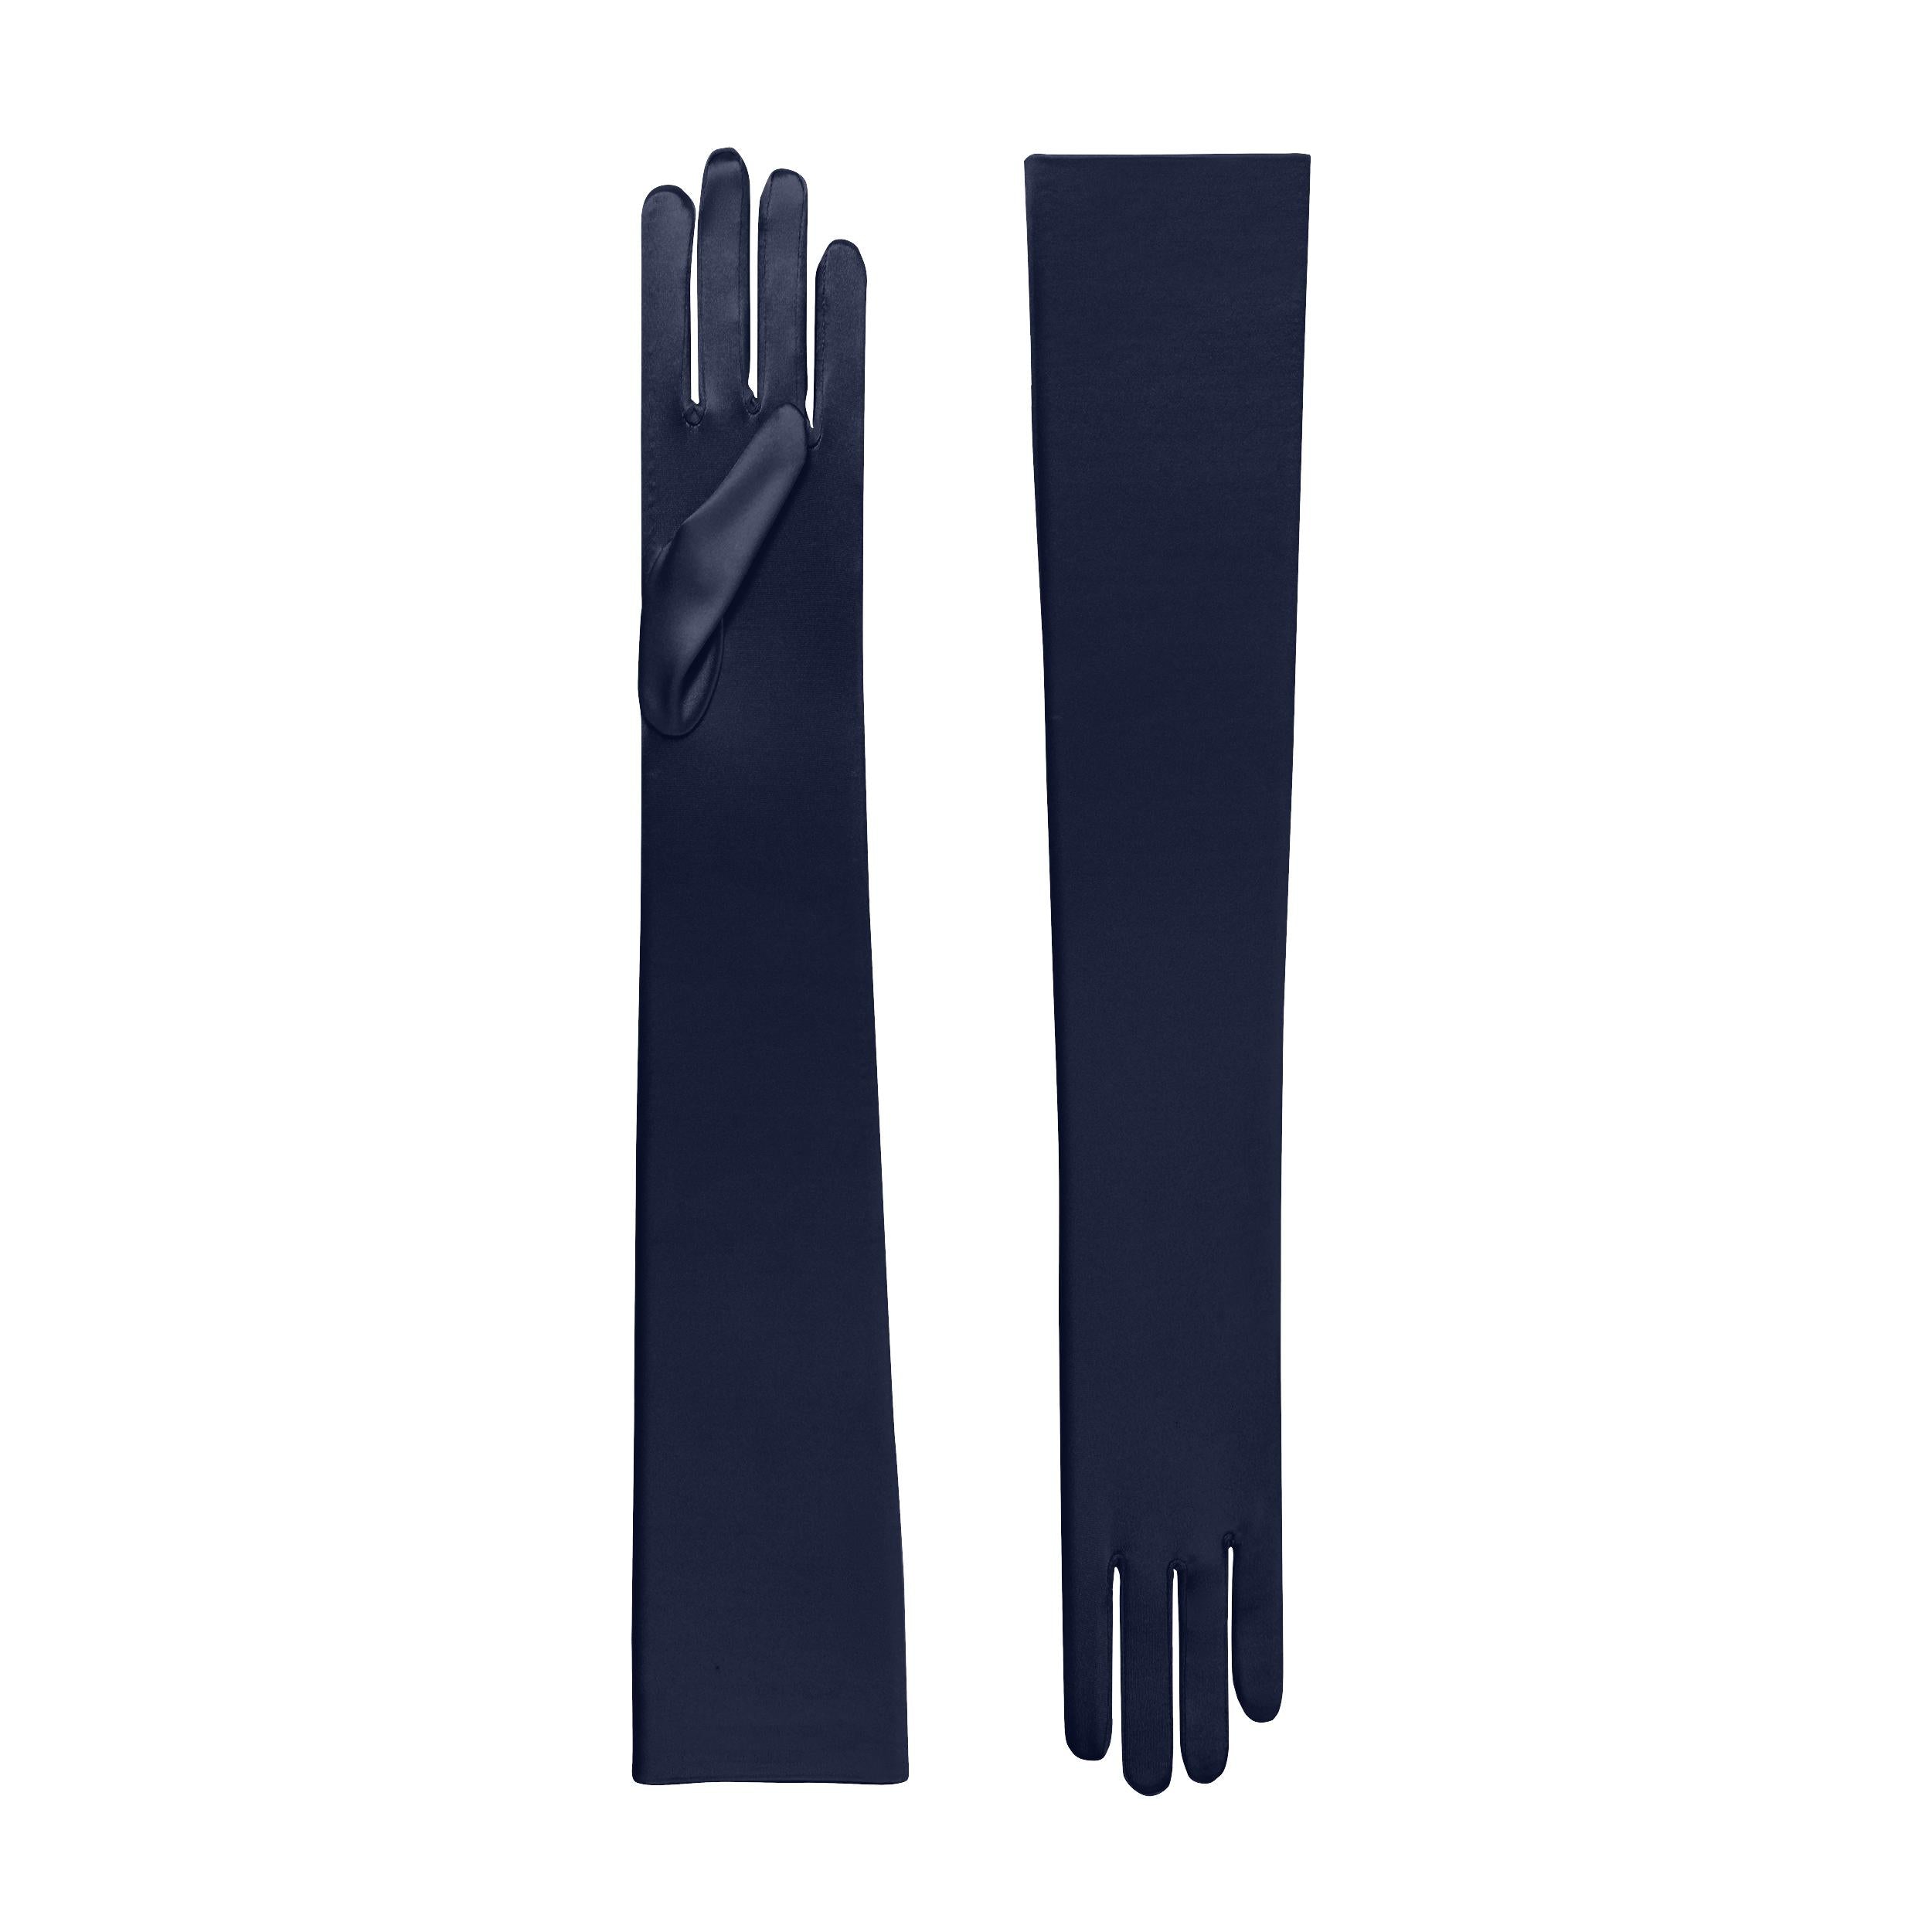 Cornelia James - Navy Blue Satin Opera Gloves - Hermione - Size Large (8½) - Made to Measure Evening Gloves by Cornelia James